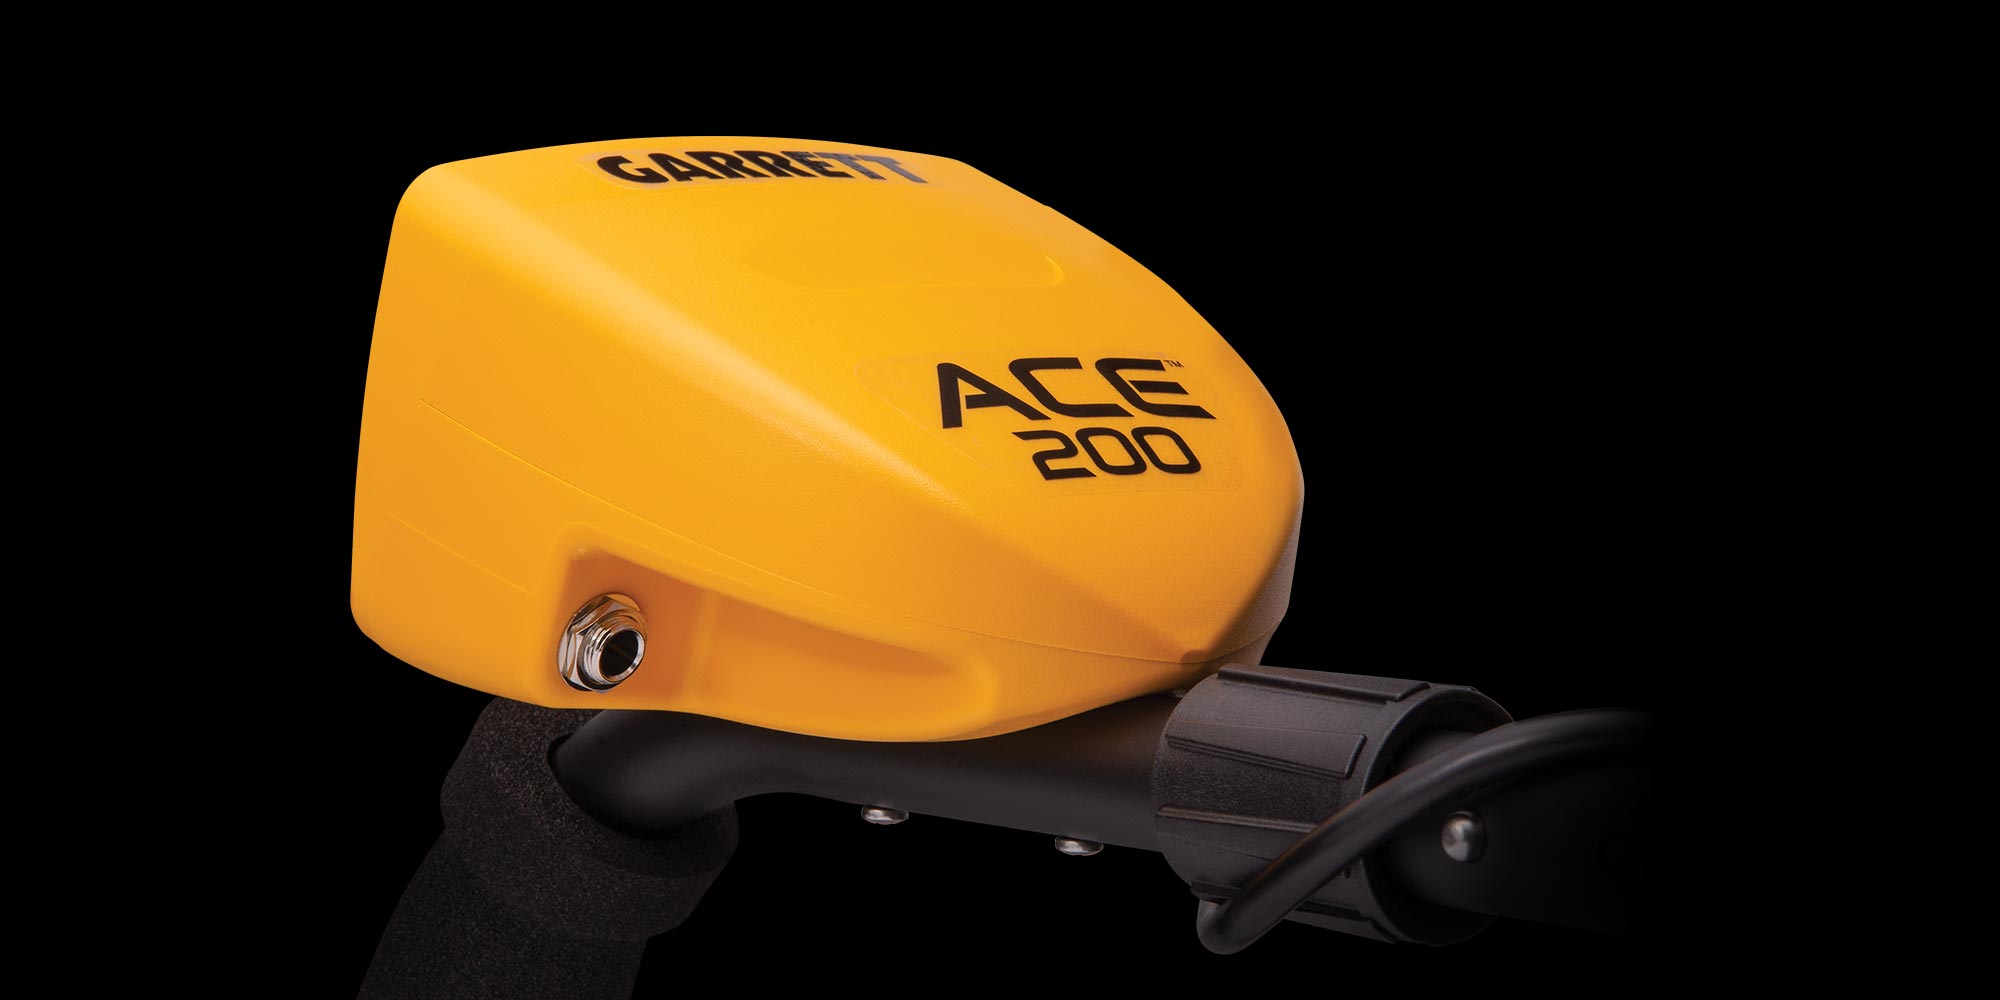 Buy Garrett ACE200i Metal detector Detection depth (max.) 100 cm Digital,  Acoustic 1141370